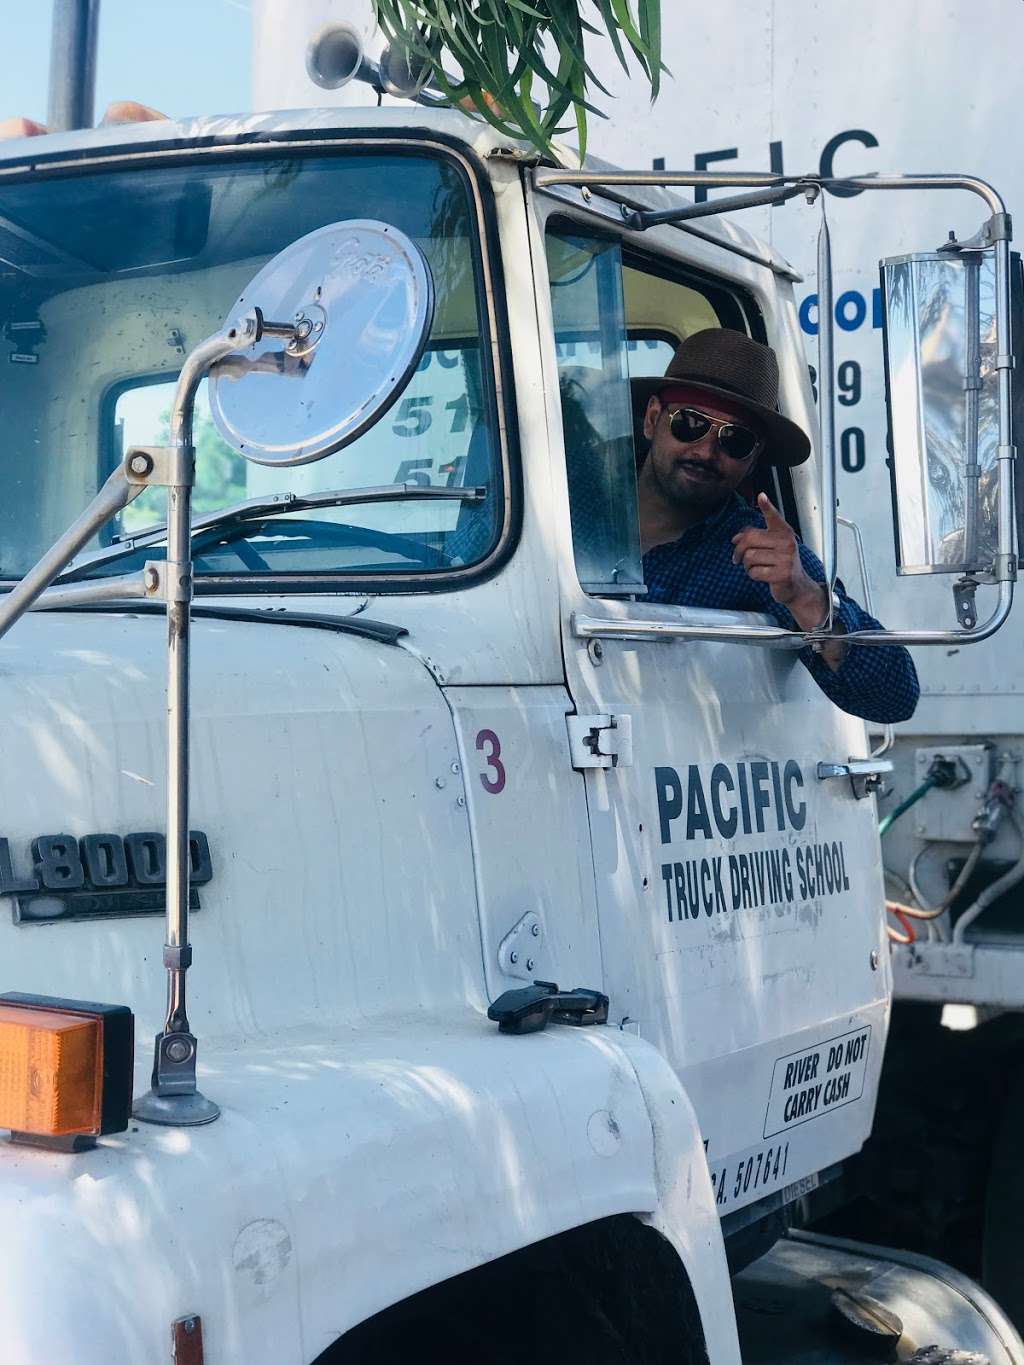 Pacific Truck Driving School | 3890 Depot Rd, Hayward, CA 94545, USA | Phone: (510) 780-6392